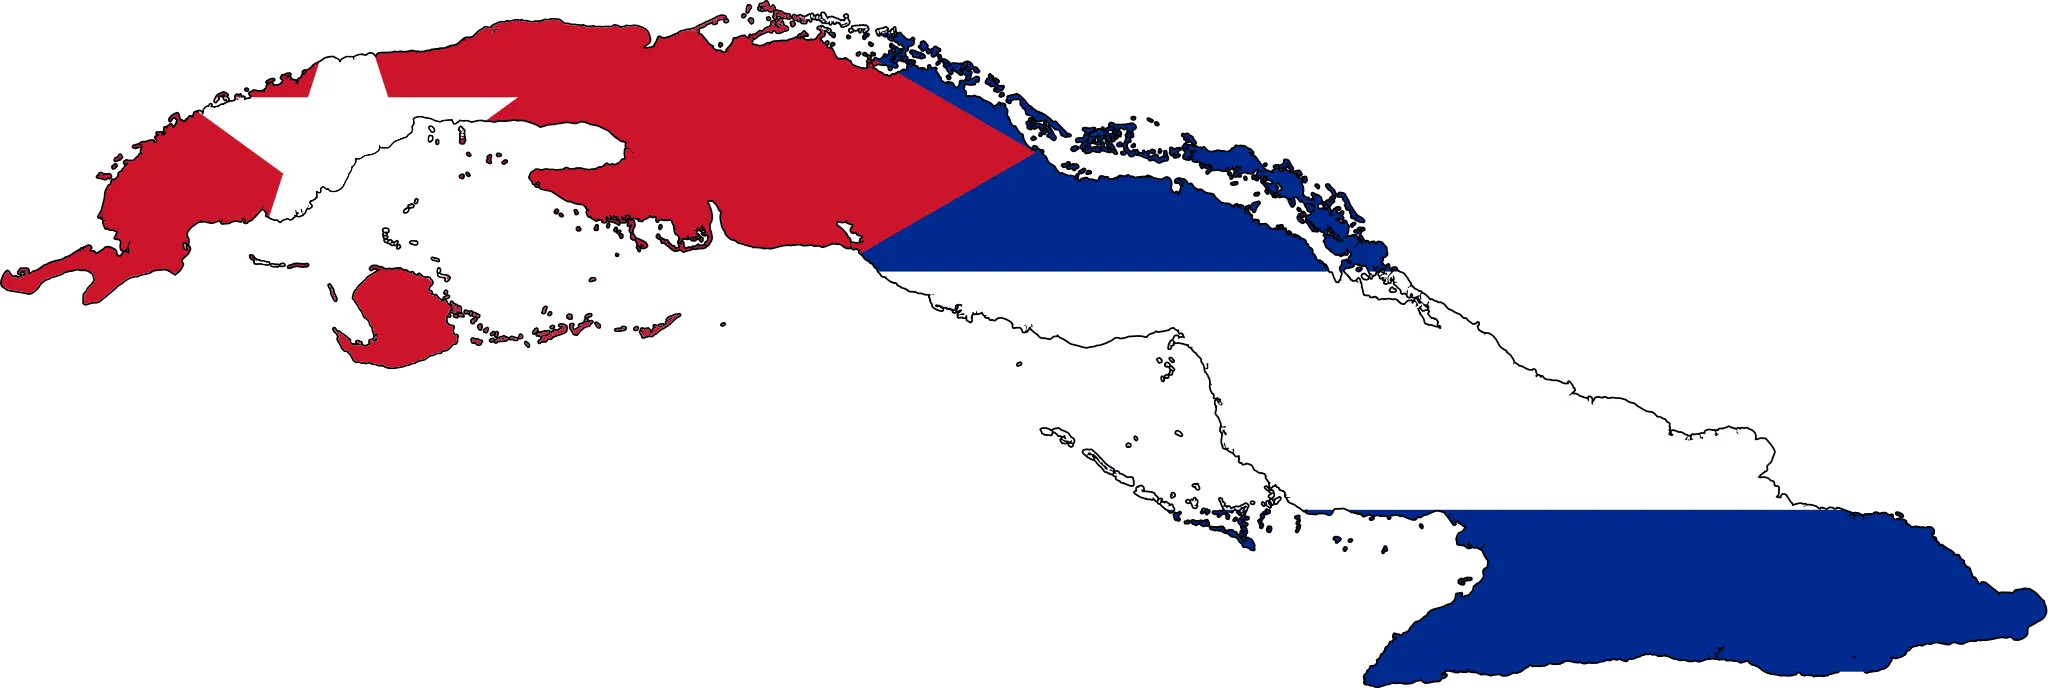 Cuba Flag Map